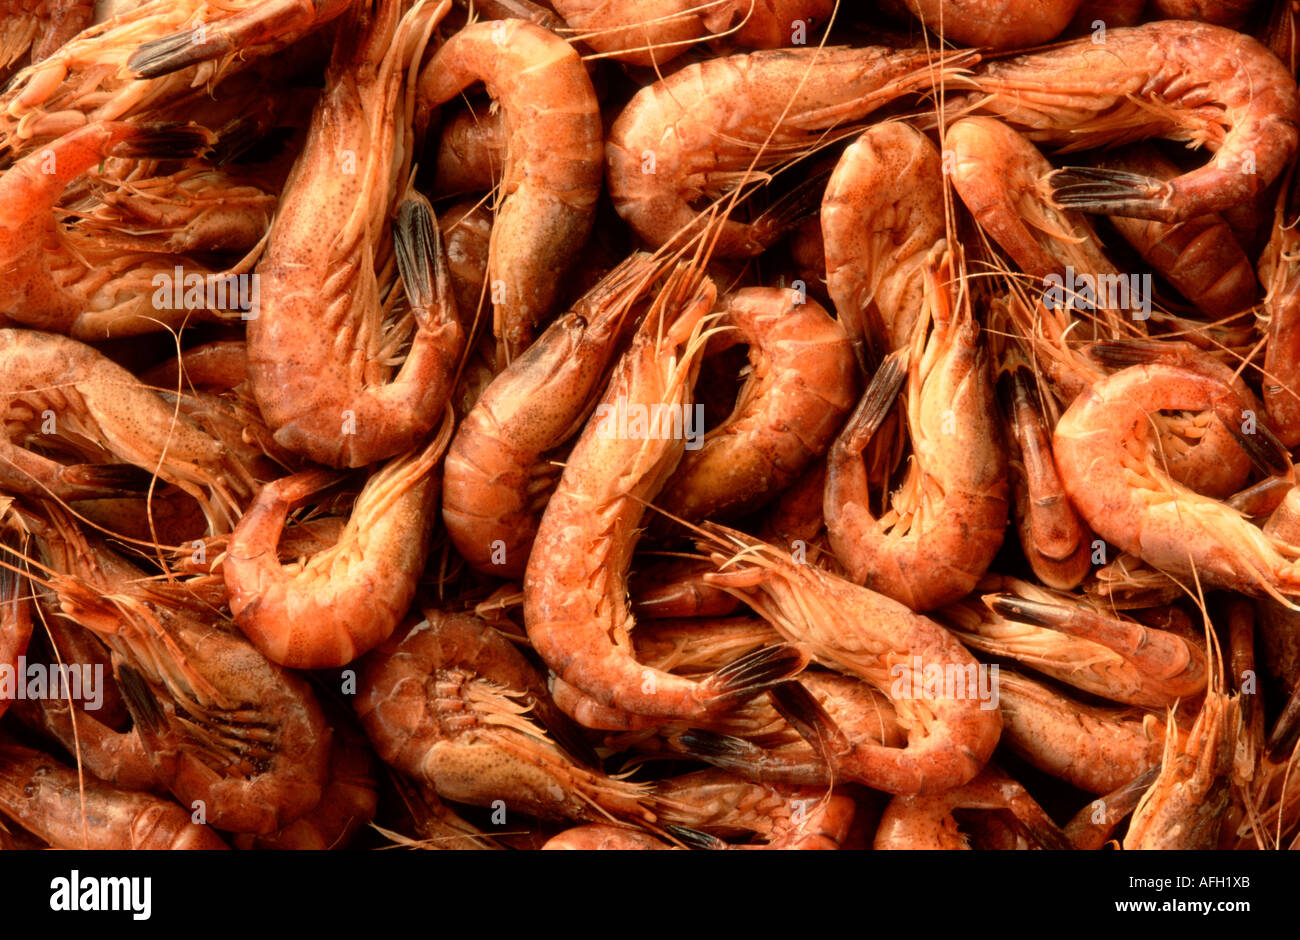 Common European Shrimps, Schleswig-Holstein, Germany / (Crangon crangon) Stock Photo